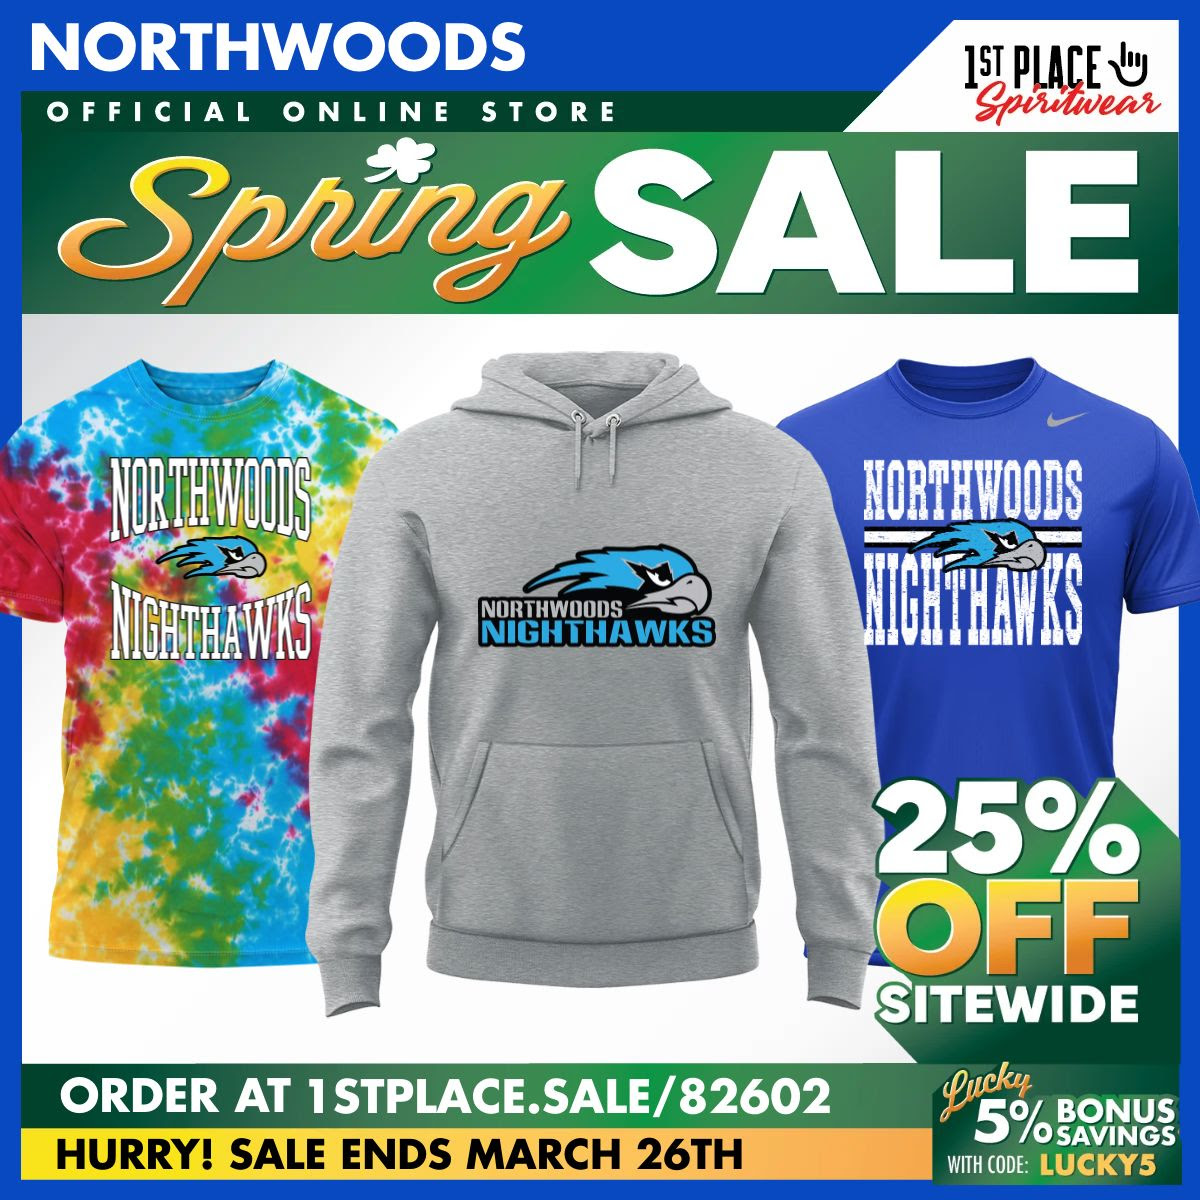 The Northwoods Spring Spirit Wear Sale ends tomorrow. Save 25% off the entire site including Nike Dri-Fit tees! La venta de ropa de espíritu primaveral de Northwoods finaliza mañana! ¡puedes ahorrar un 25% , incluidas las camisetas Nike Dri-Fit. 1stplace.sale/82602